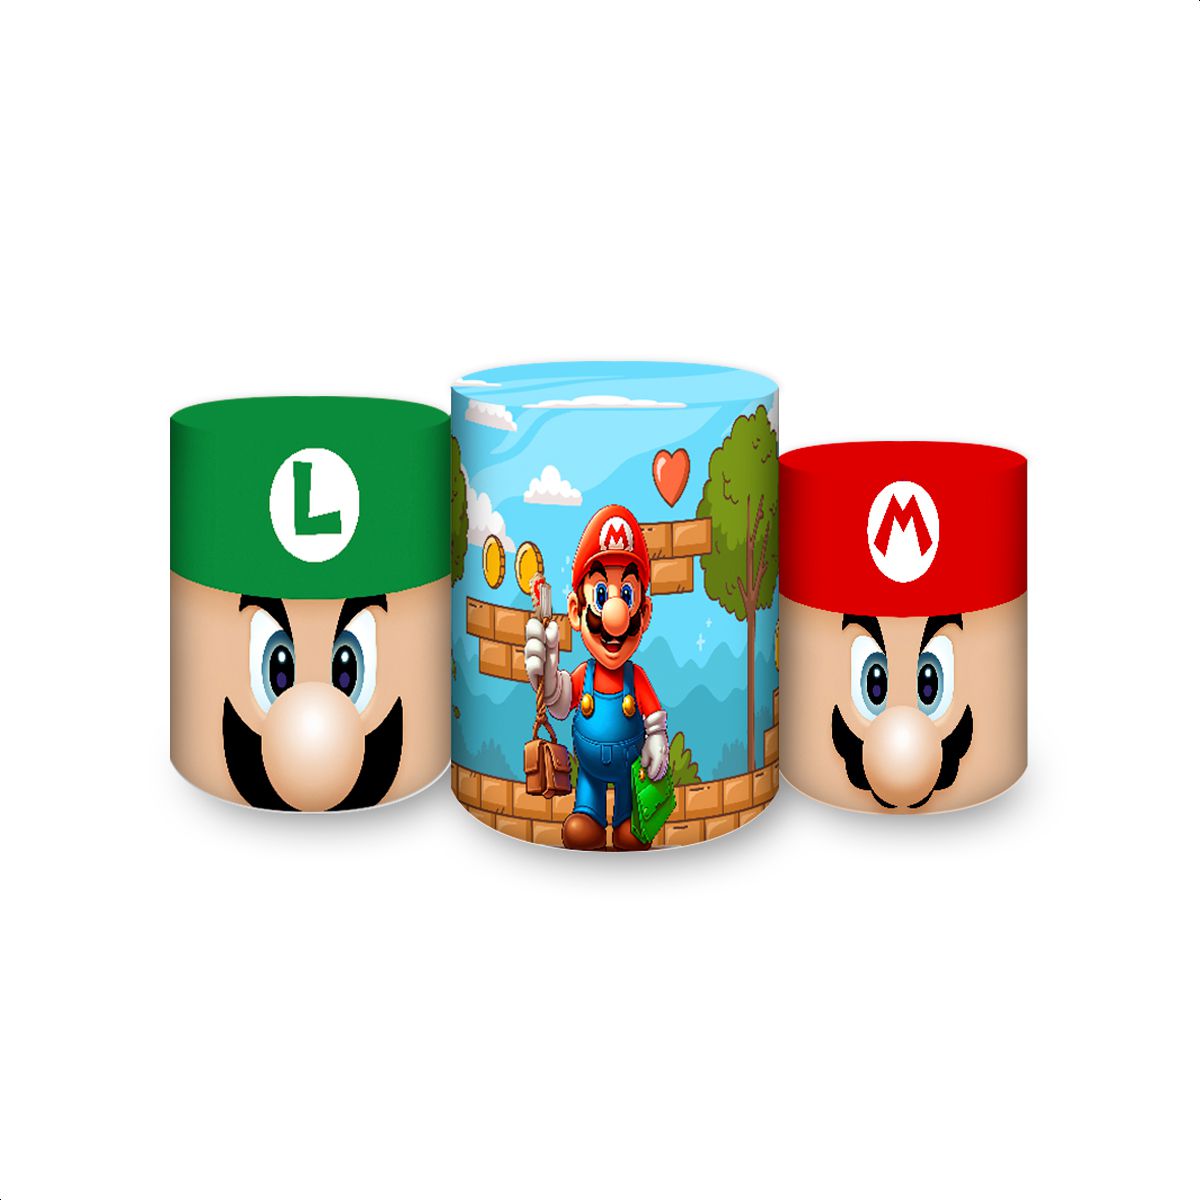 Trio Capas Cilindros Sublimados Tema Super Mario 4... - Painel Festivo